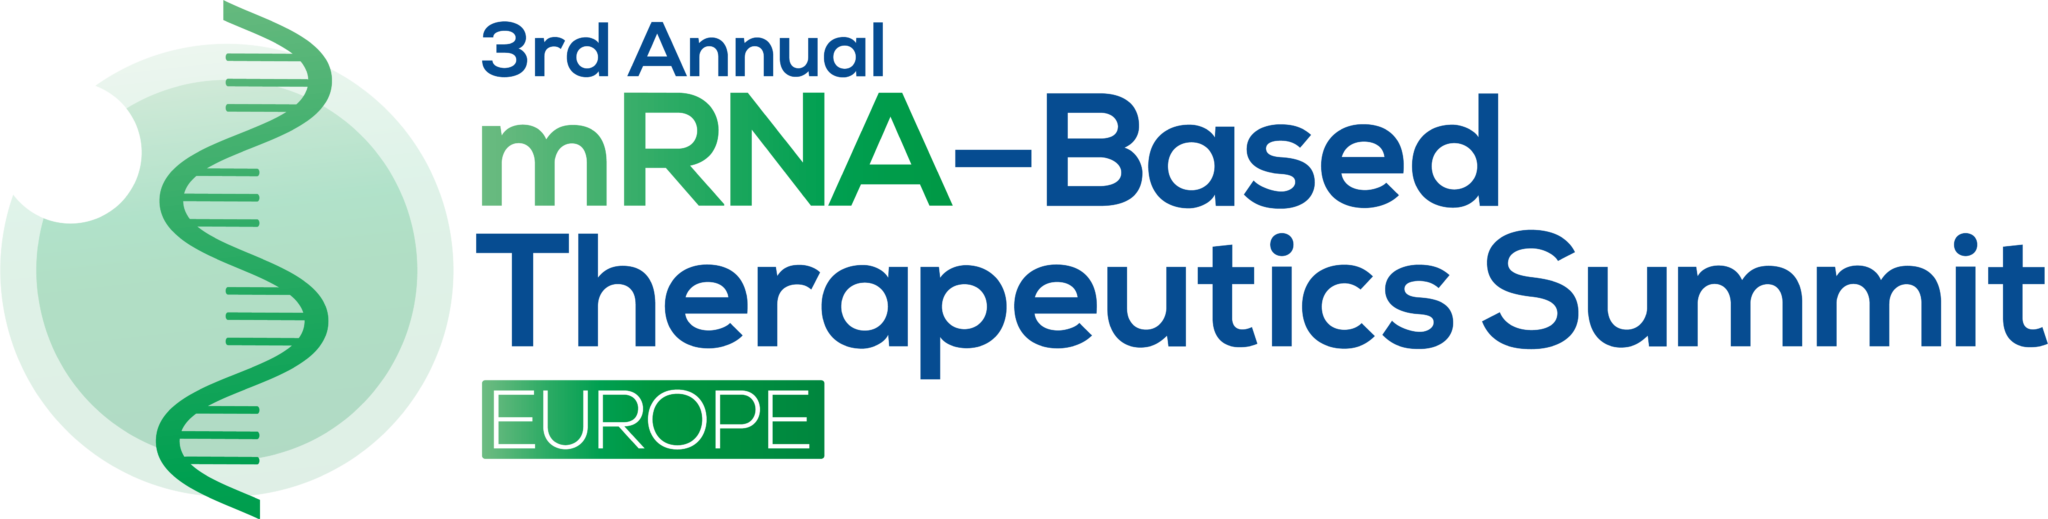 3rd-mRNA-Based-Therapeutics-Summit-Europe-logo-2048x519